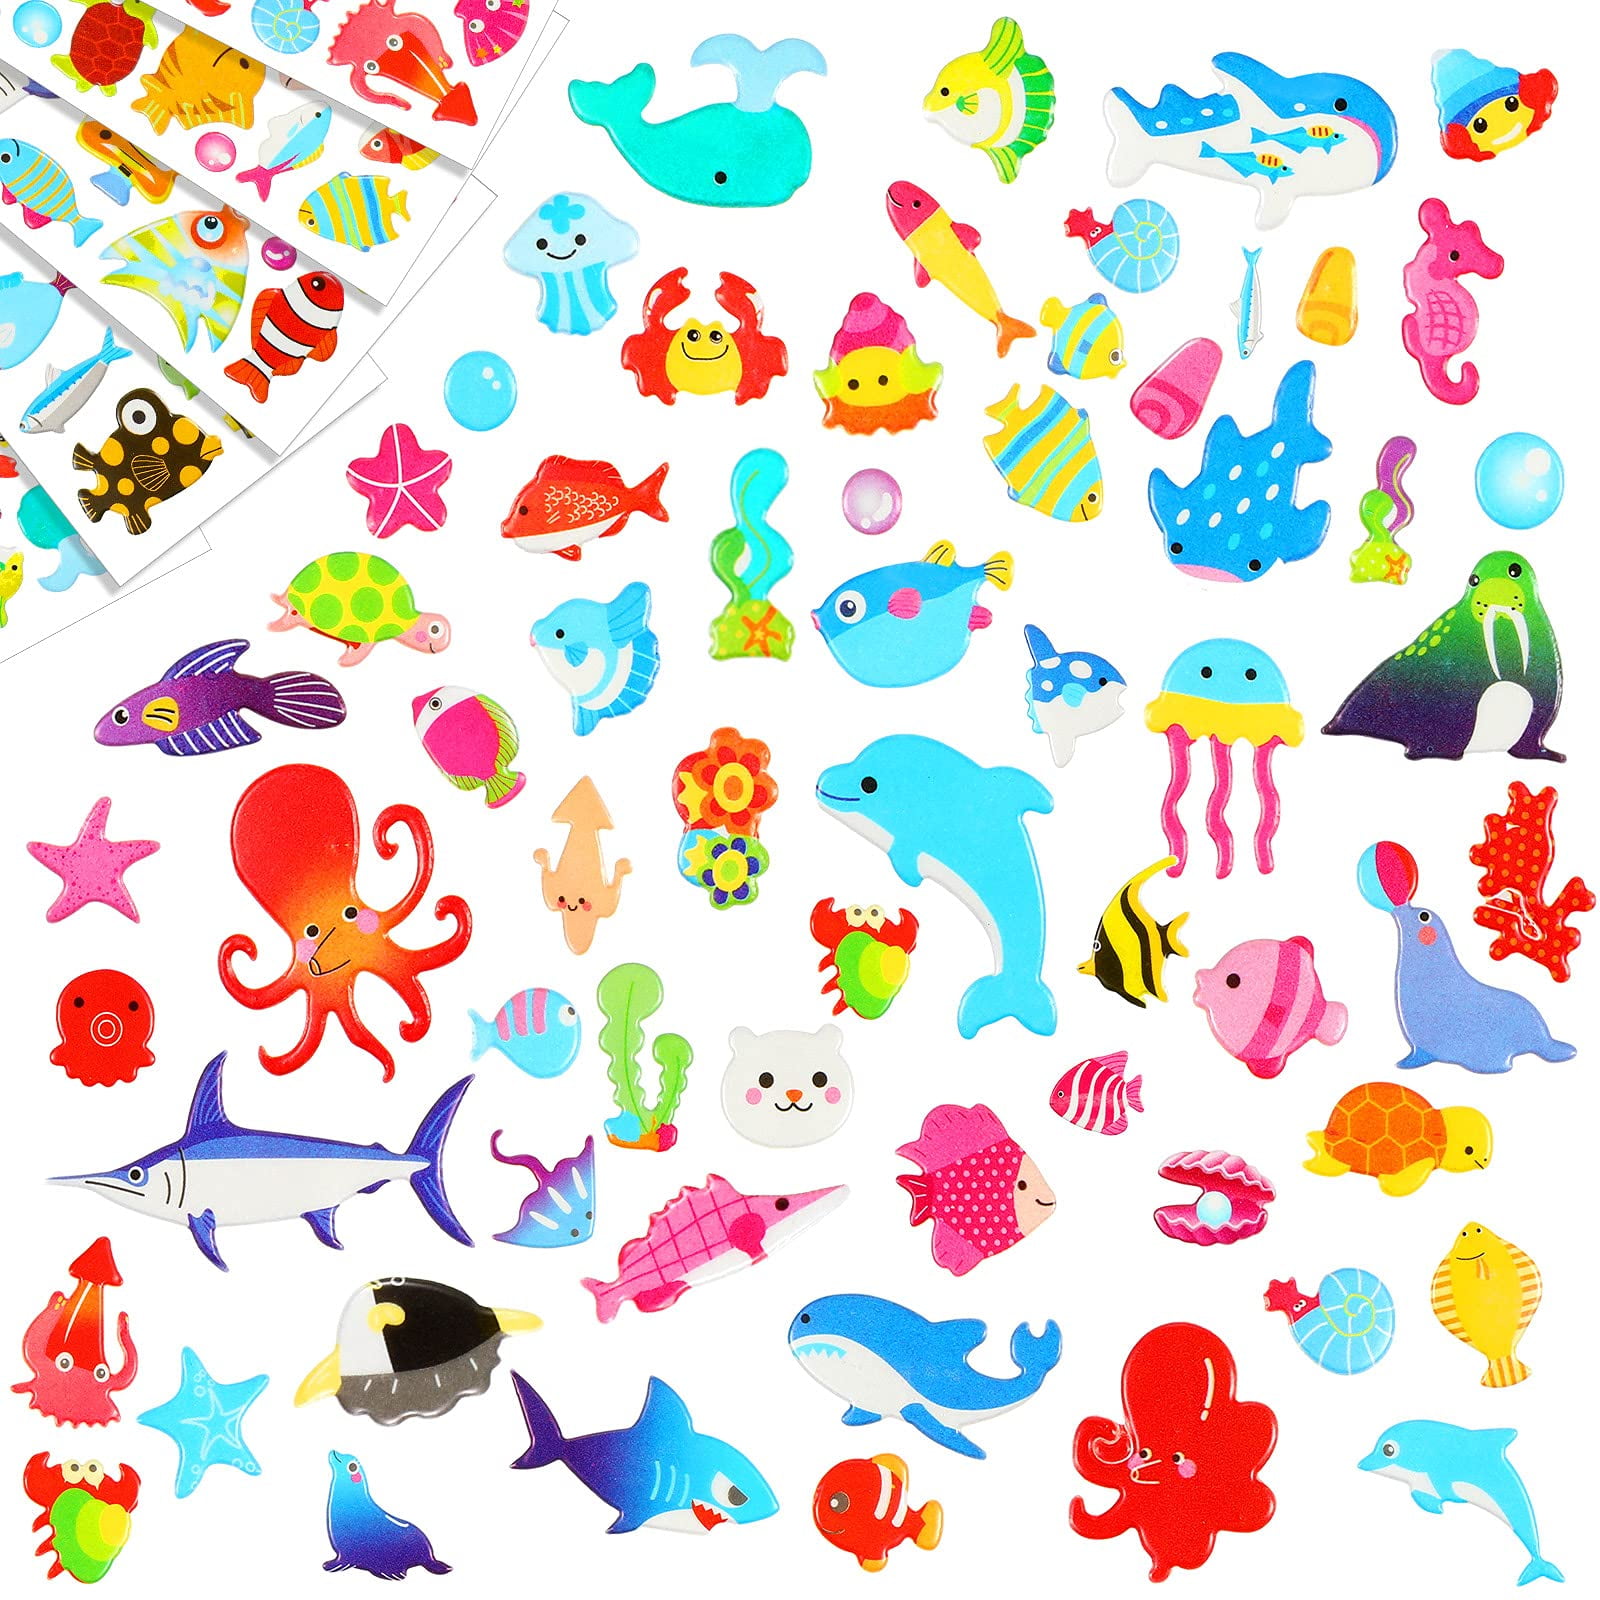 DanceeMangoos 50 Sheets Kawaii Washi Stickers, Cute Cartoon Printed  Adhesive Label Decorative Sticker for Scrapbooking Diary Journaling Planner  DIY